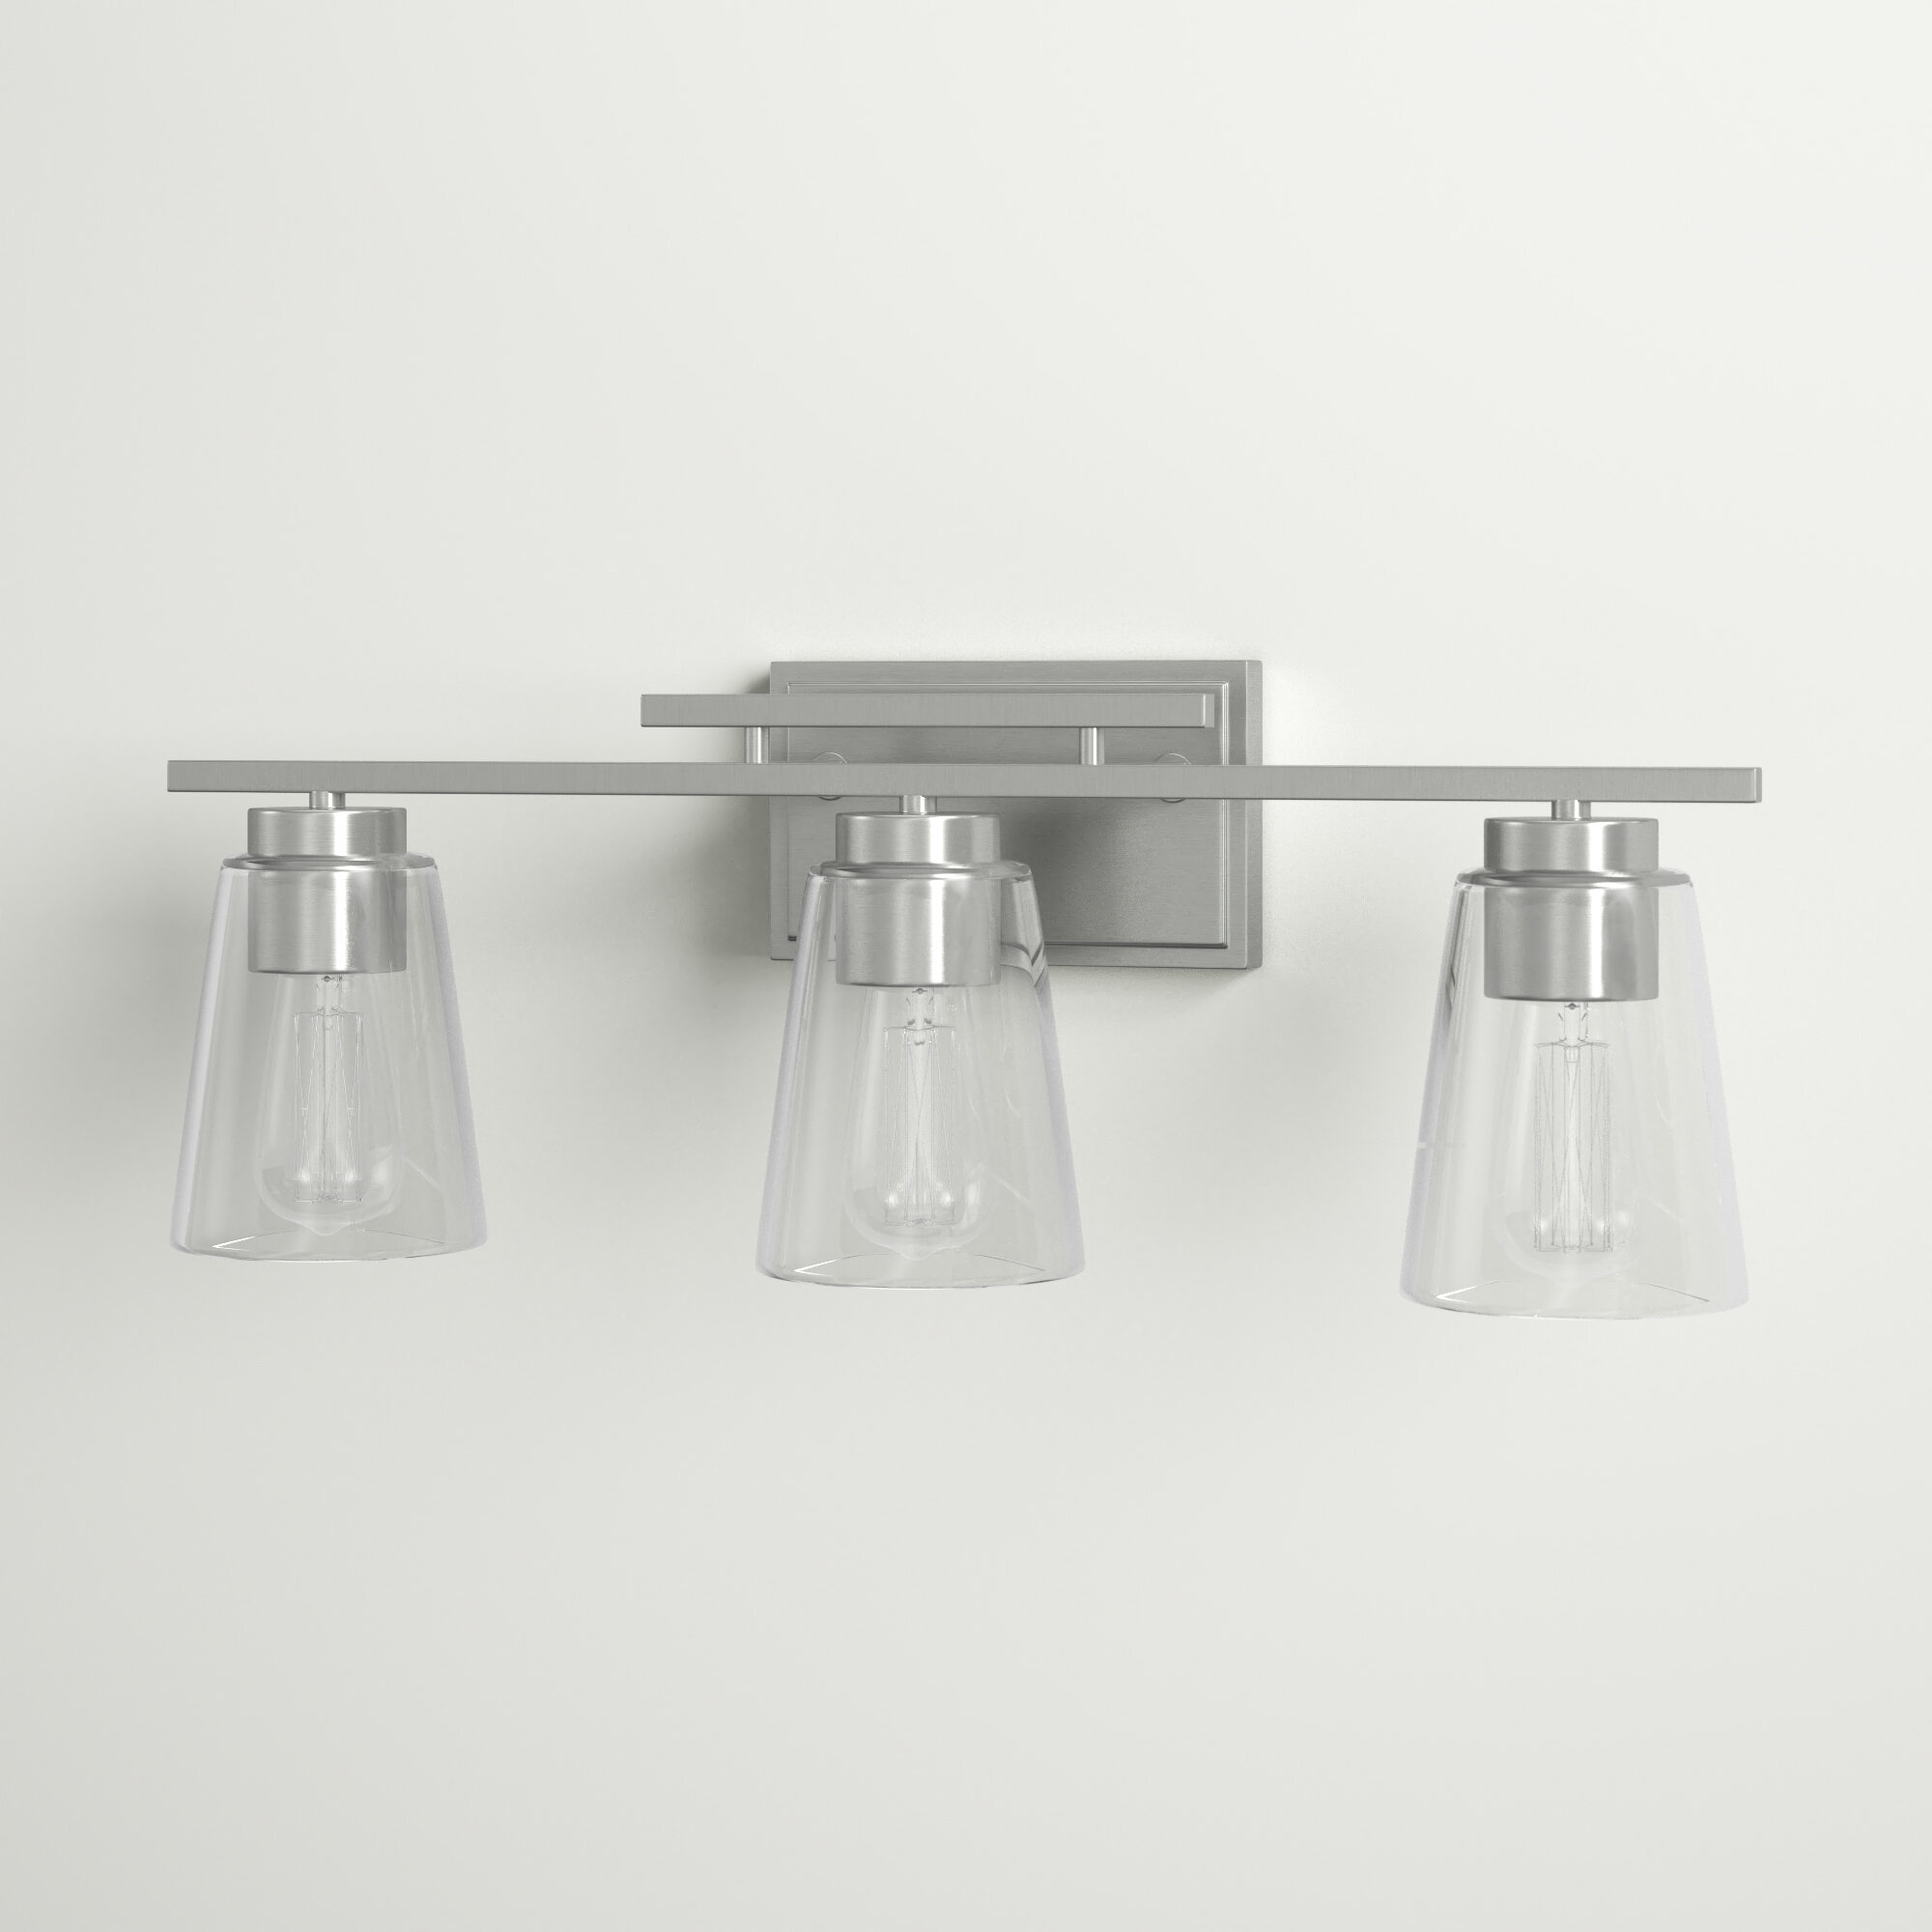 WIHTU 3-Light Crystal Wa LED Bathroom Vanity Light Fixtures Chrome Wall Mounted